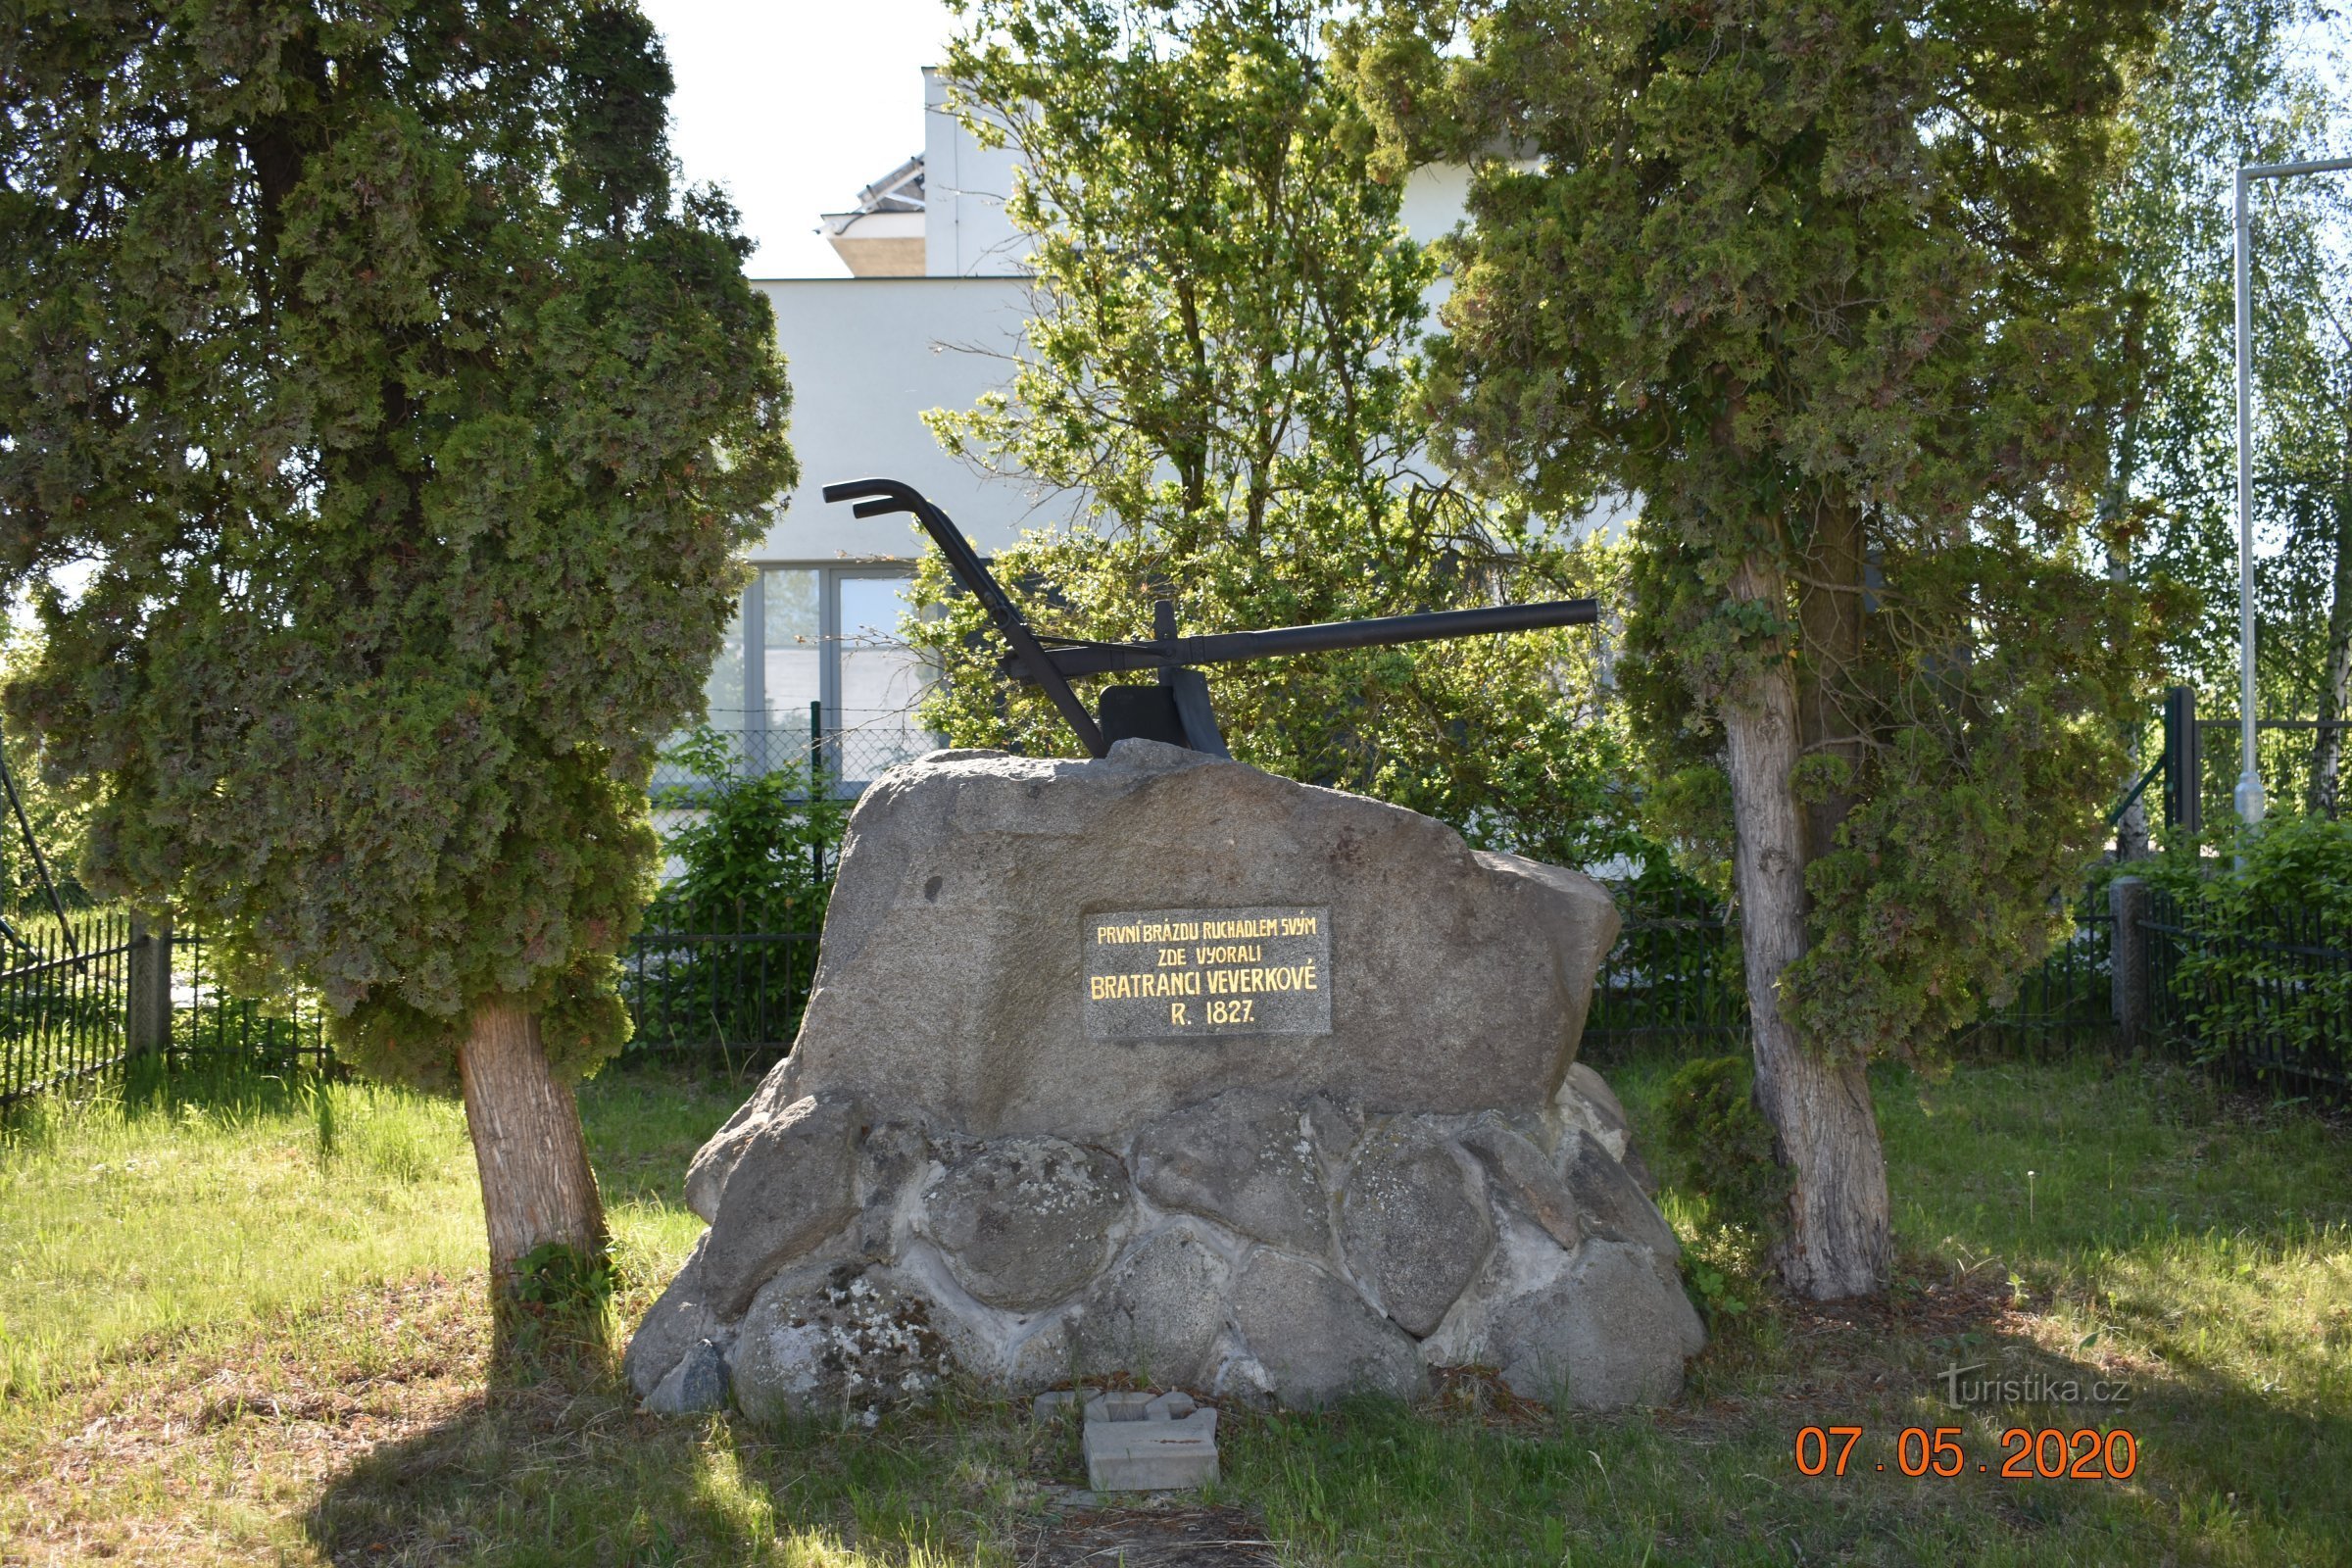 Monument över kusinernas Veverks mässa i Rybitví